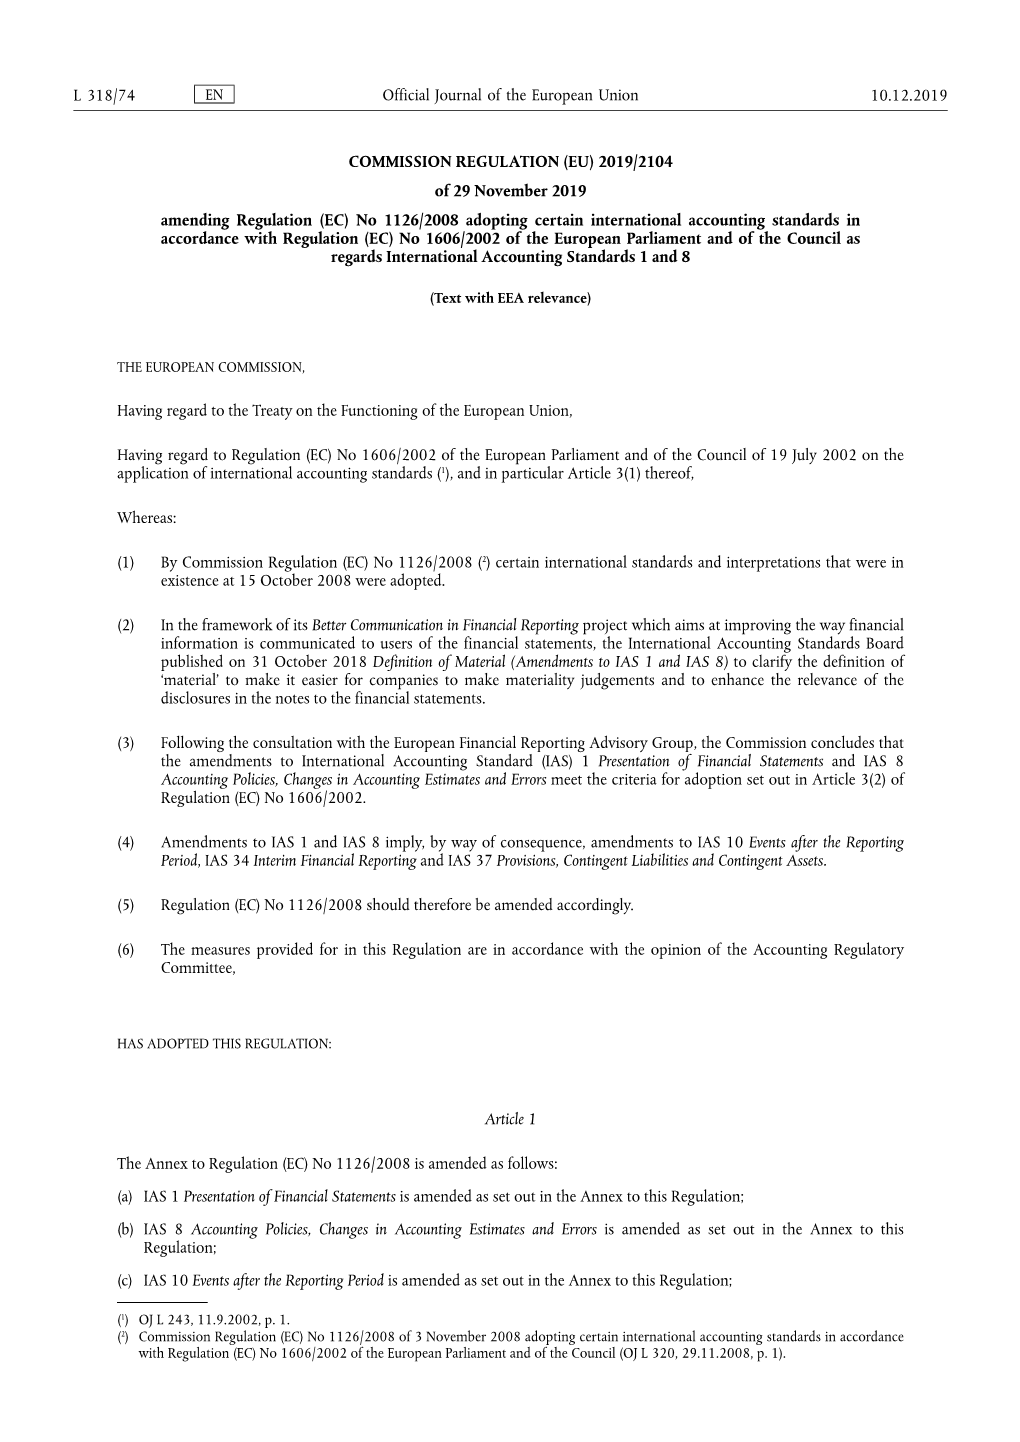 Amendments to IAS 1 and IAS 8